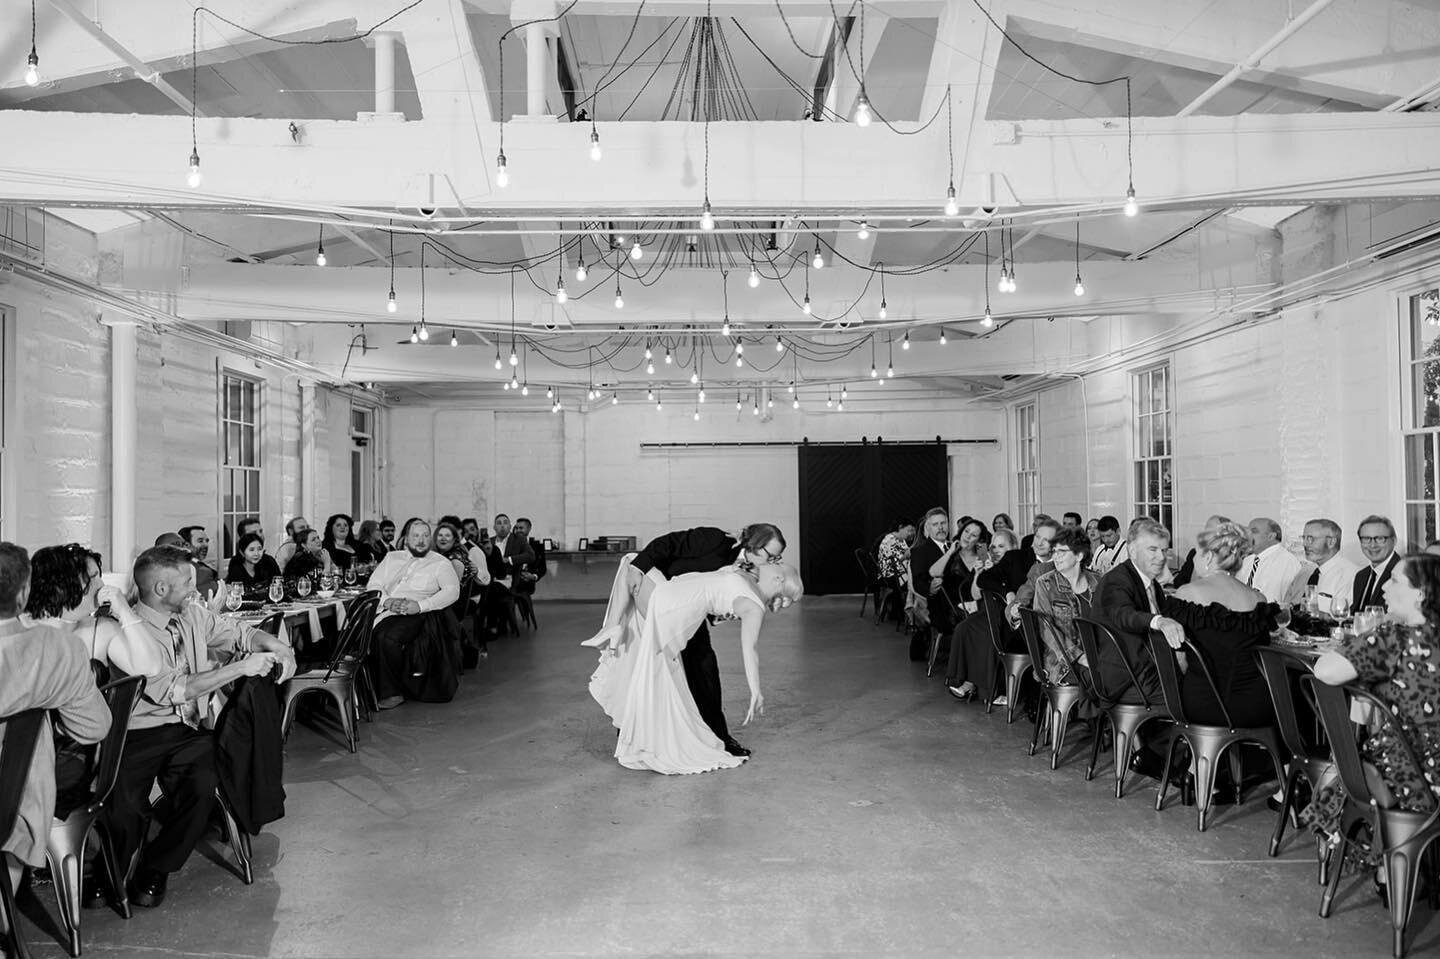 Dancing our way right into the weekend
✨
Happy Friday friends!
.
.
Photographer: @meliandchrisphoto 
Coordination &amp; Florals: @hartsandpetals 
.
.
.
#upstairsatlanta #newlyweds #brideandgroom #firstdance #wedding #venue #weddingvenue #eventvenue #